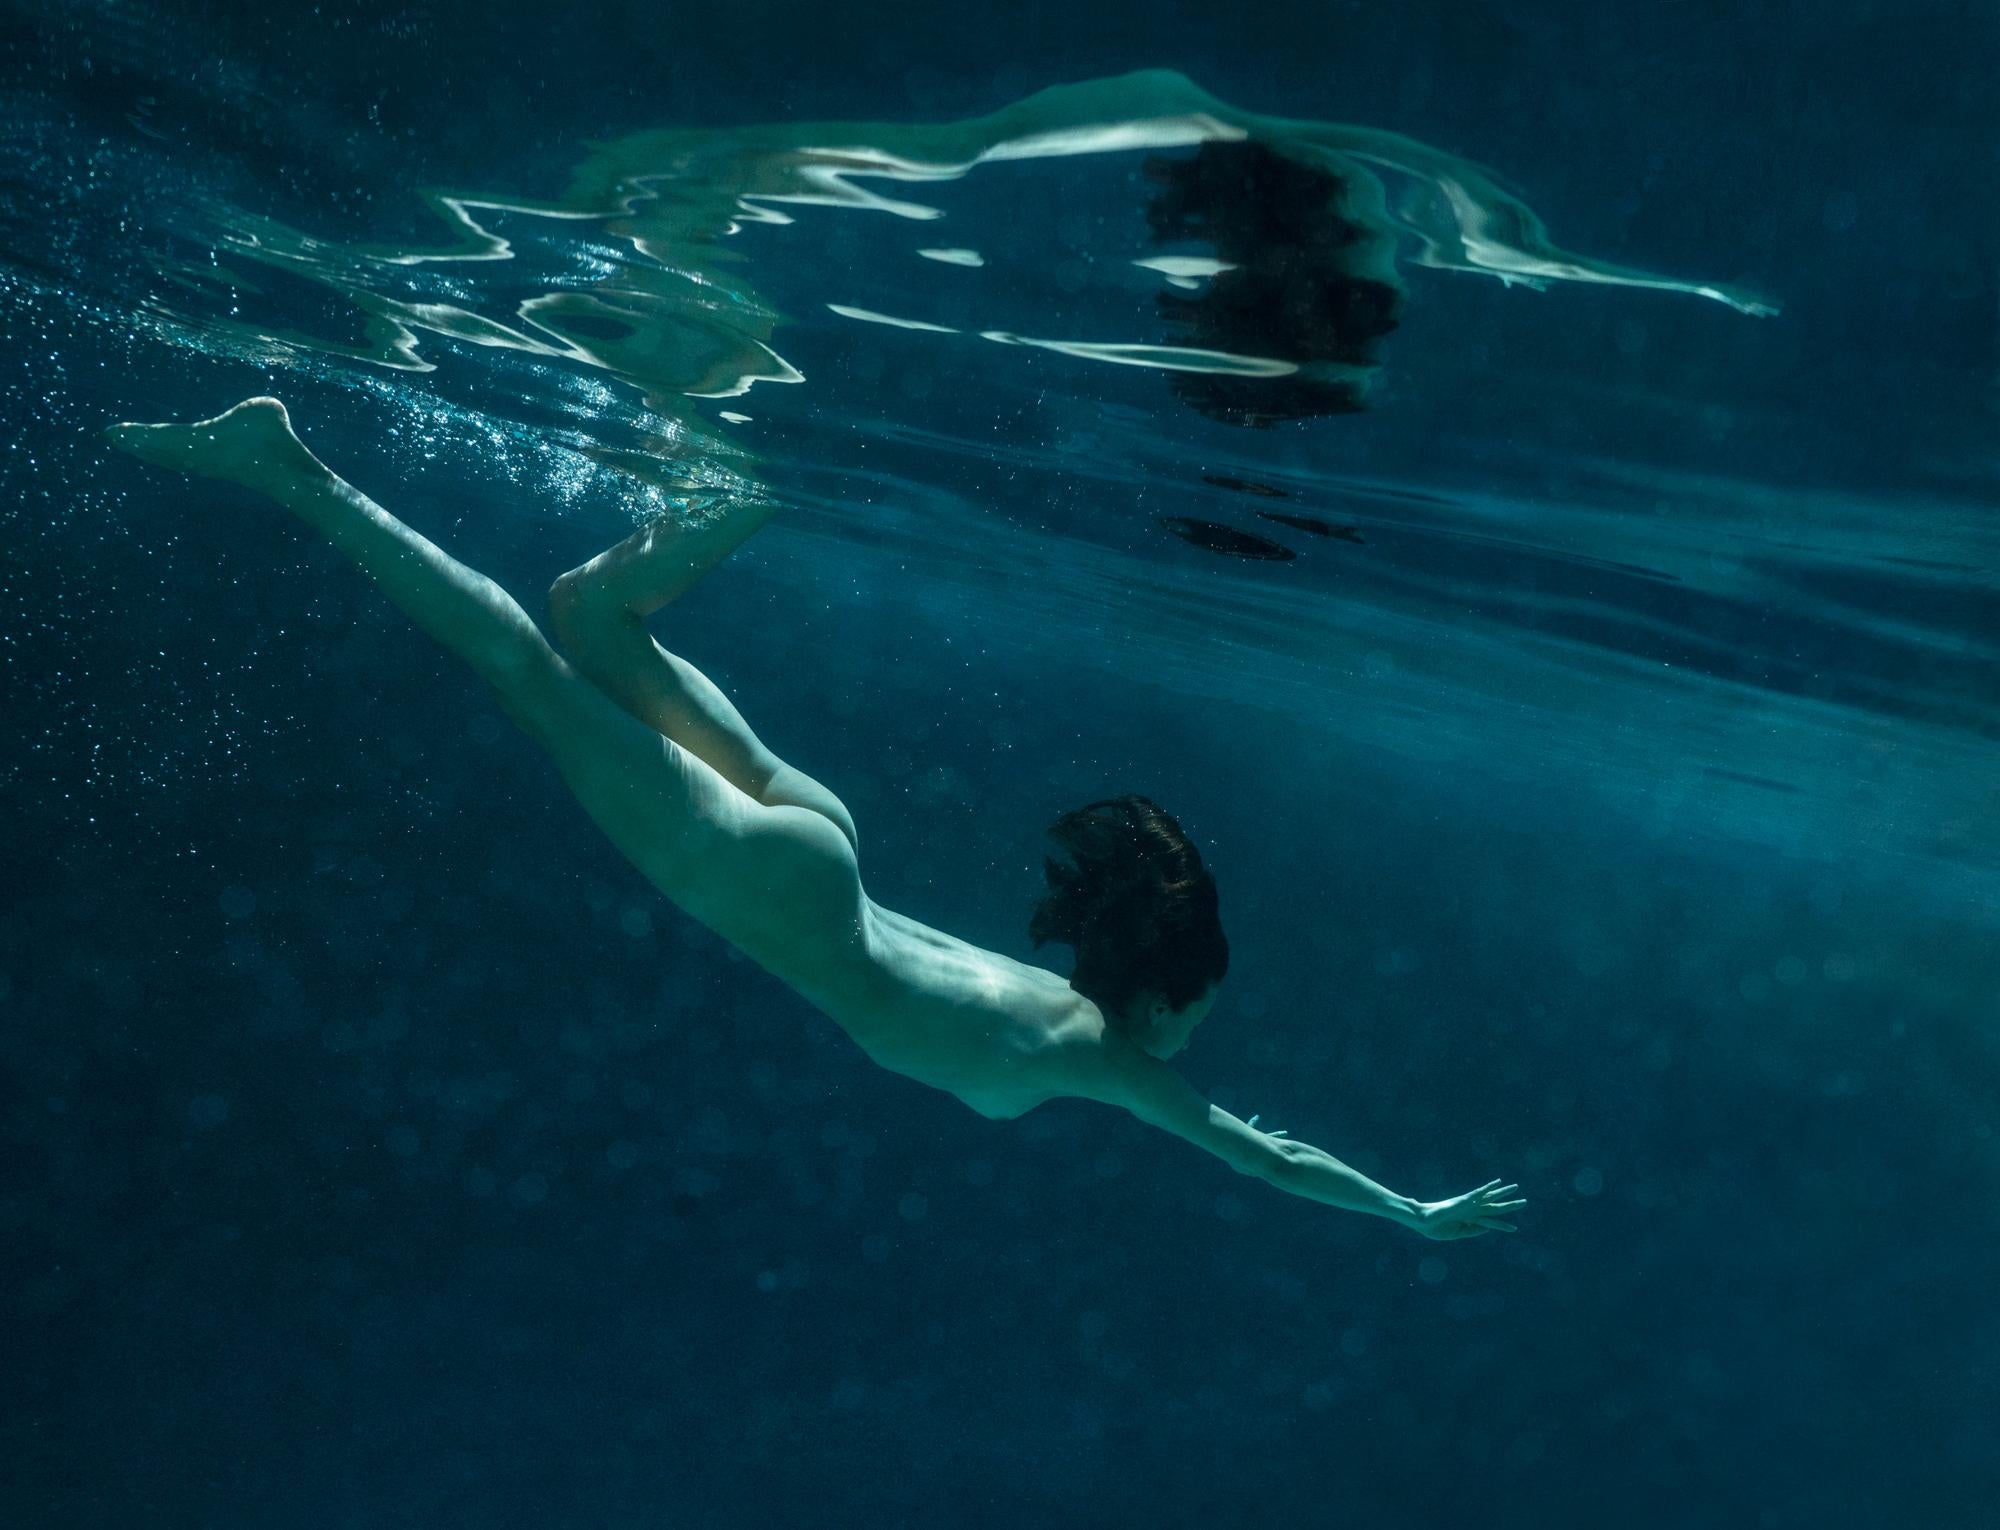 Alex Sher Figurative Photograph - Blue Mirror - underwater nude photograph - archival pigment print 17.5 x 23"